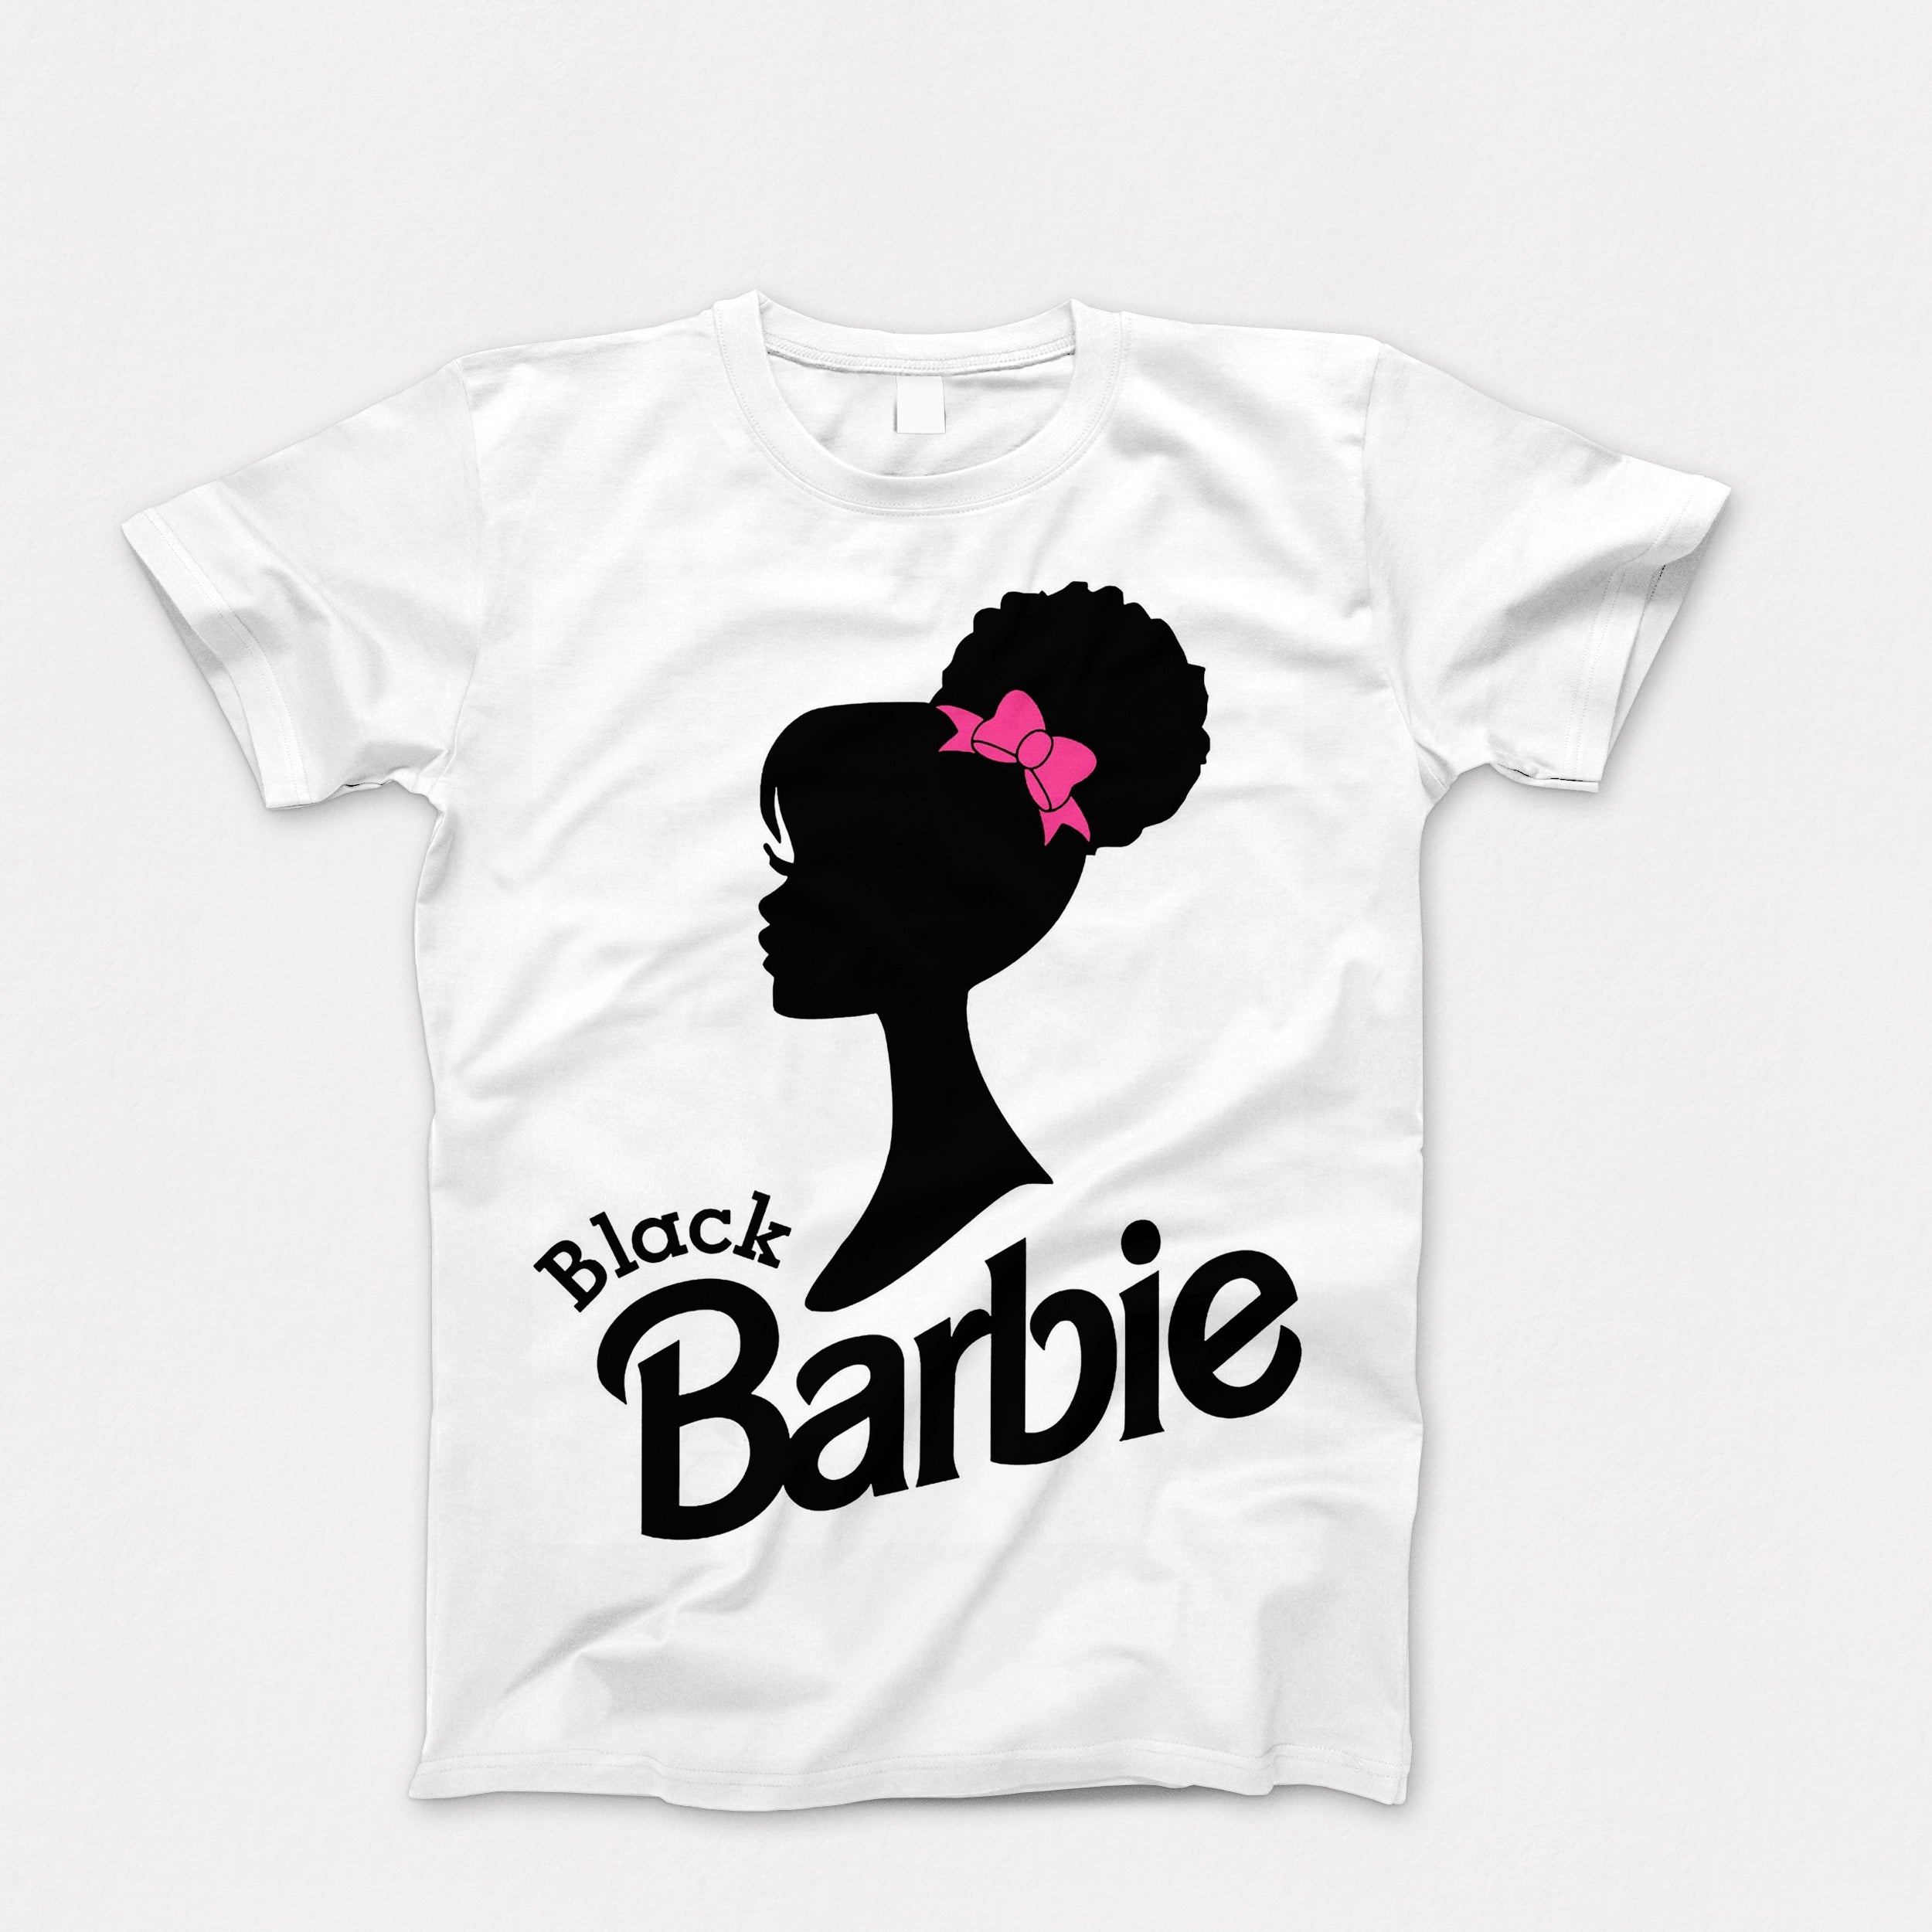 Kids Black Barbie Tee Shirt